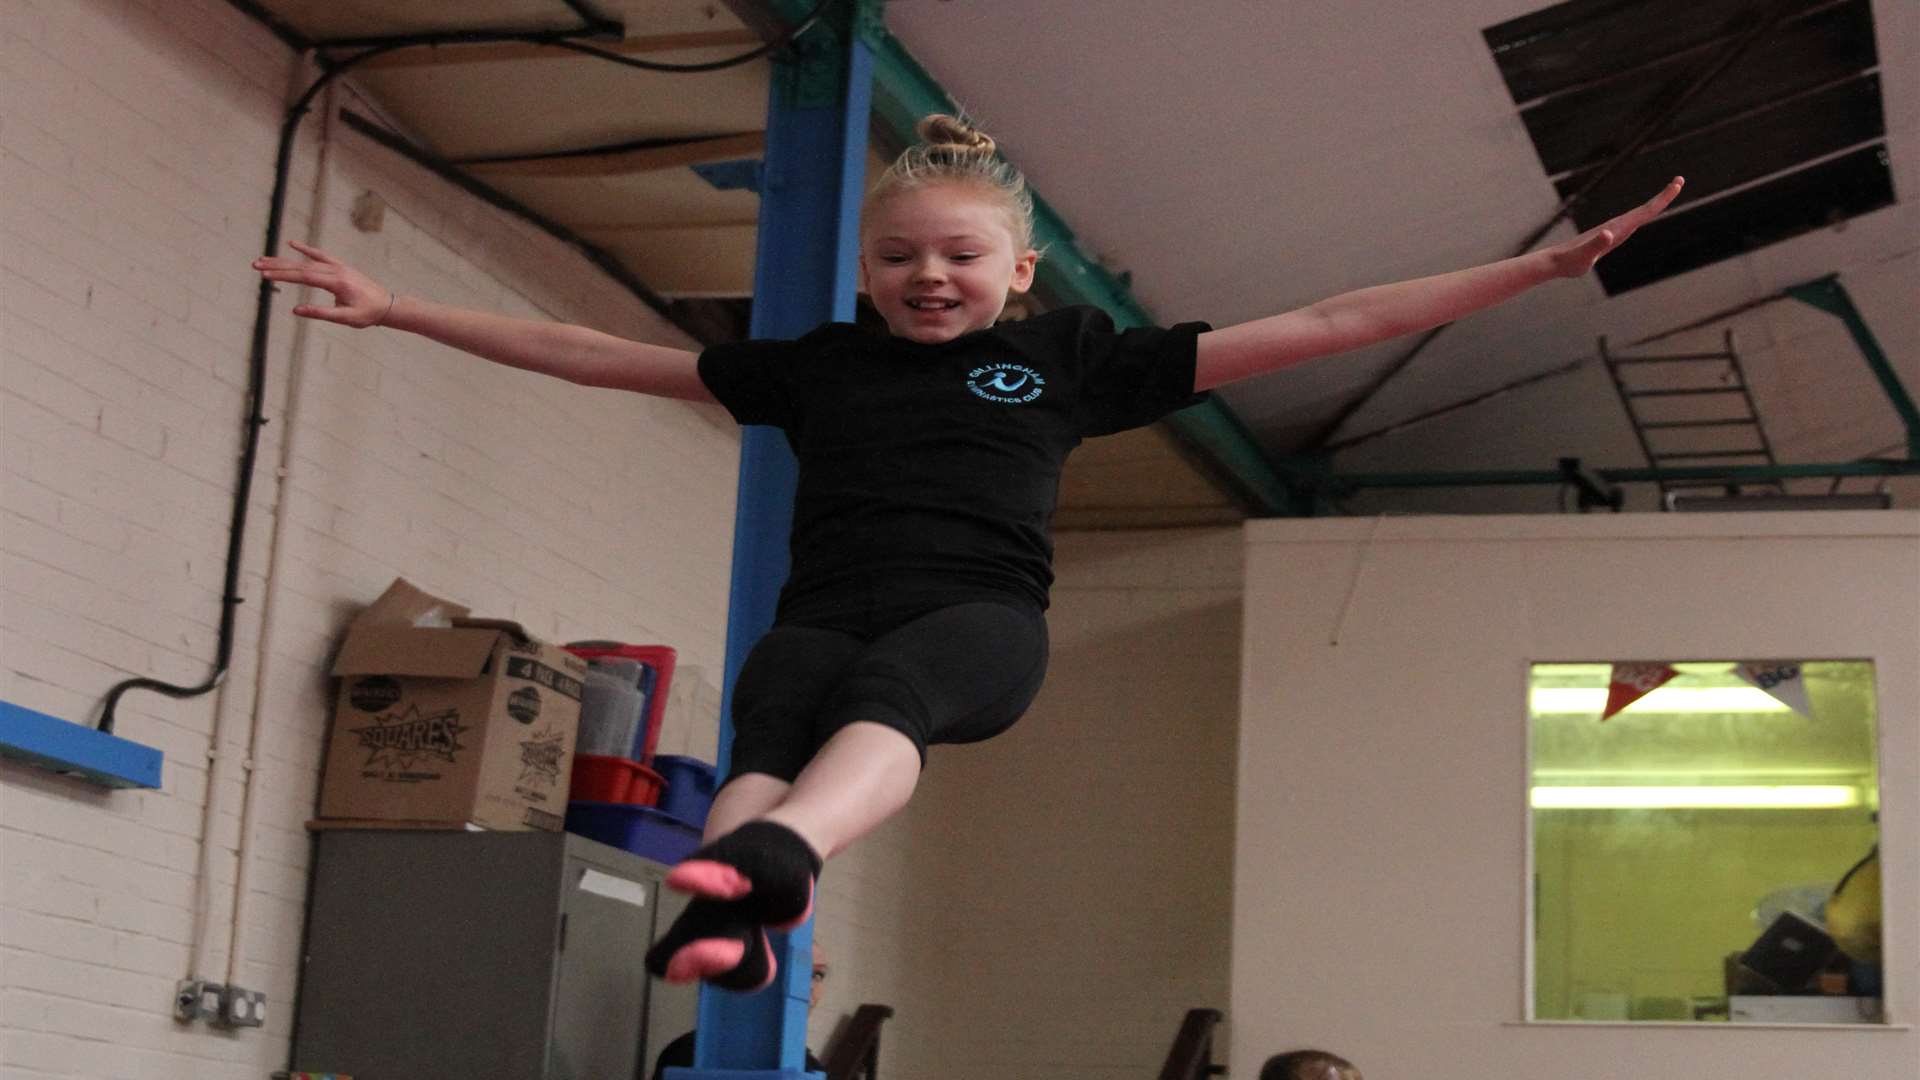 Gillingham Gymnastics Club member Tia Louise, 10